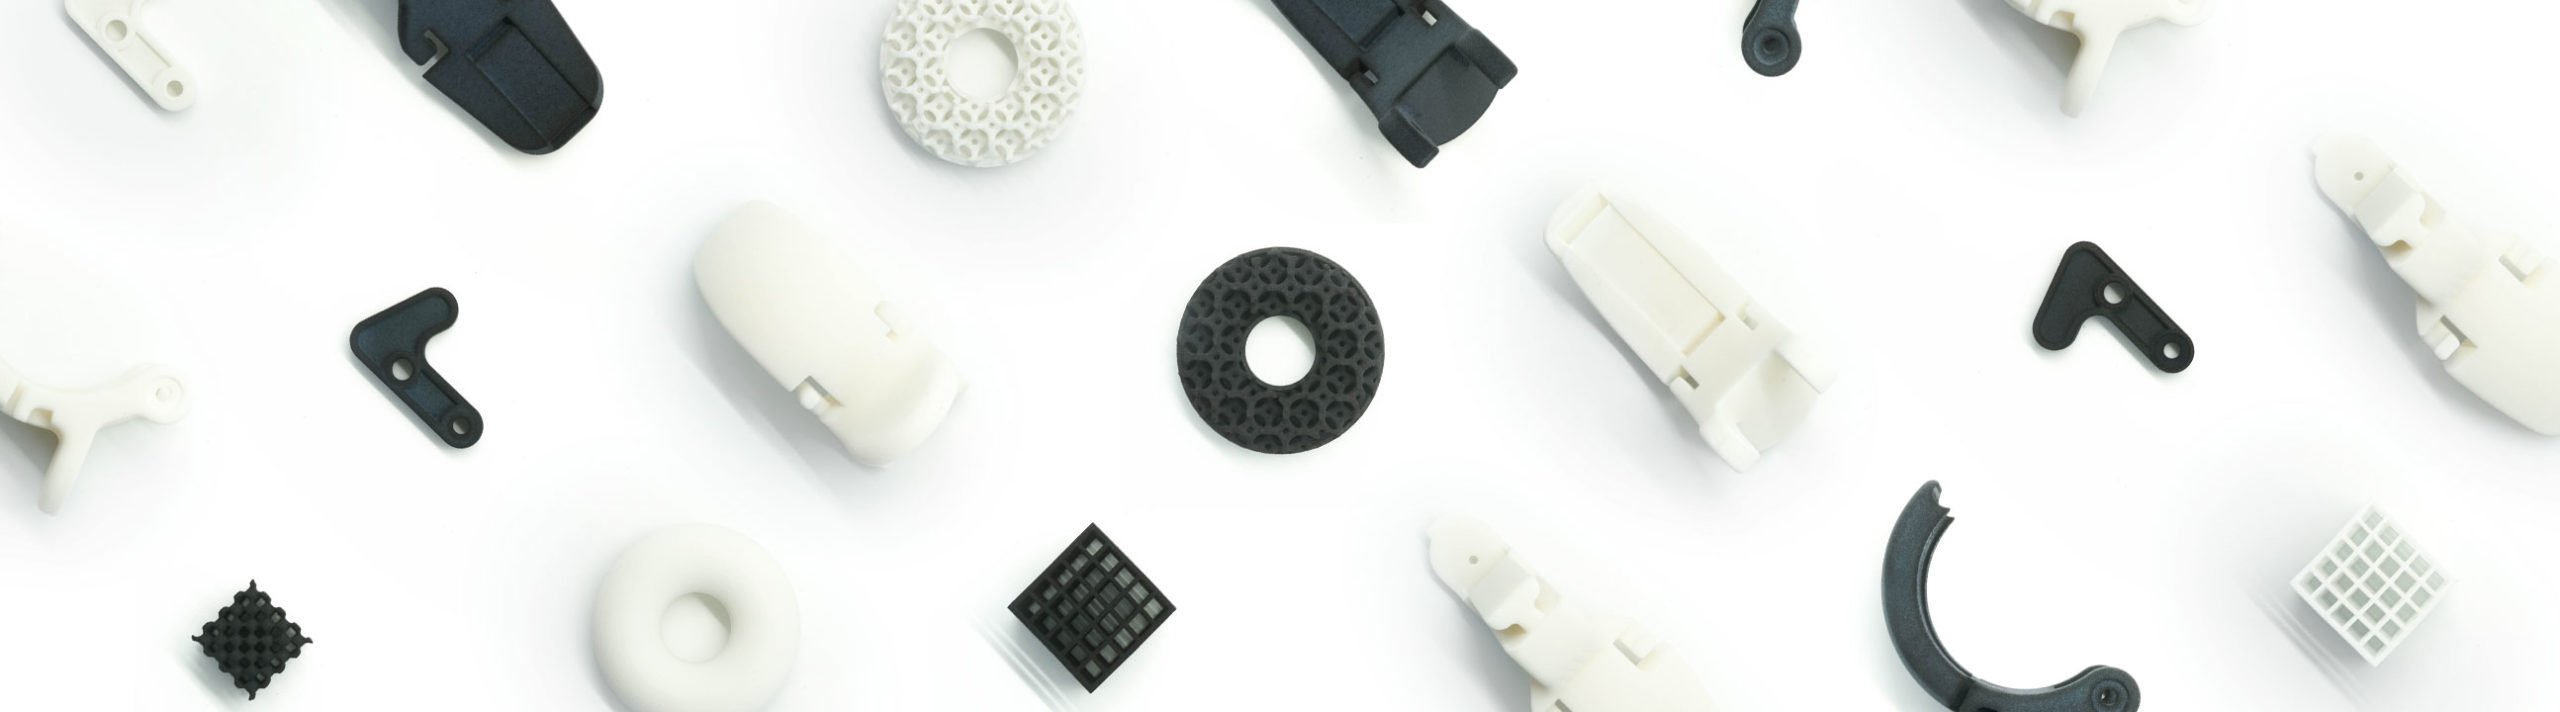 TPU (Thermoplastic Polyurethane) - 3D Printing Material - Shapeways